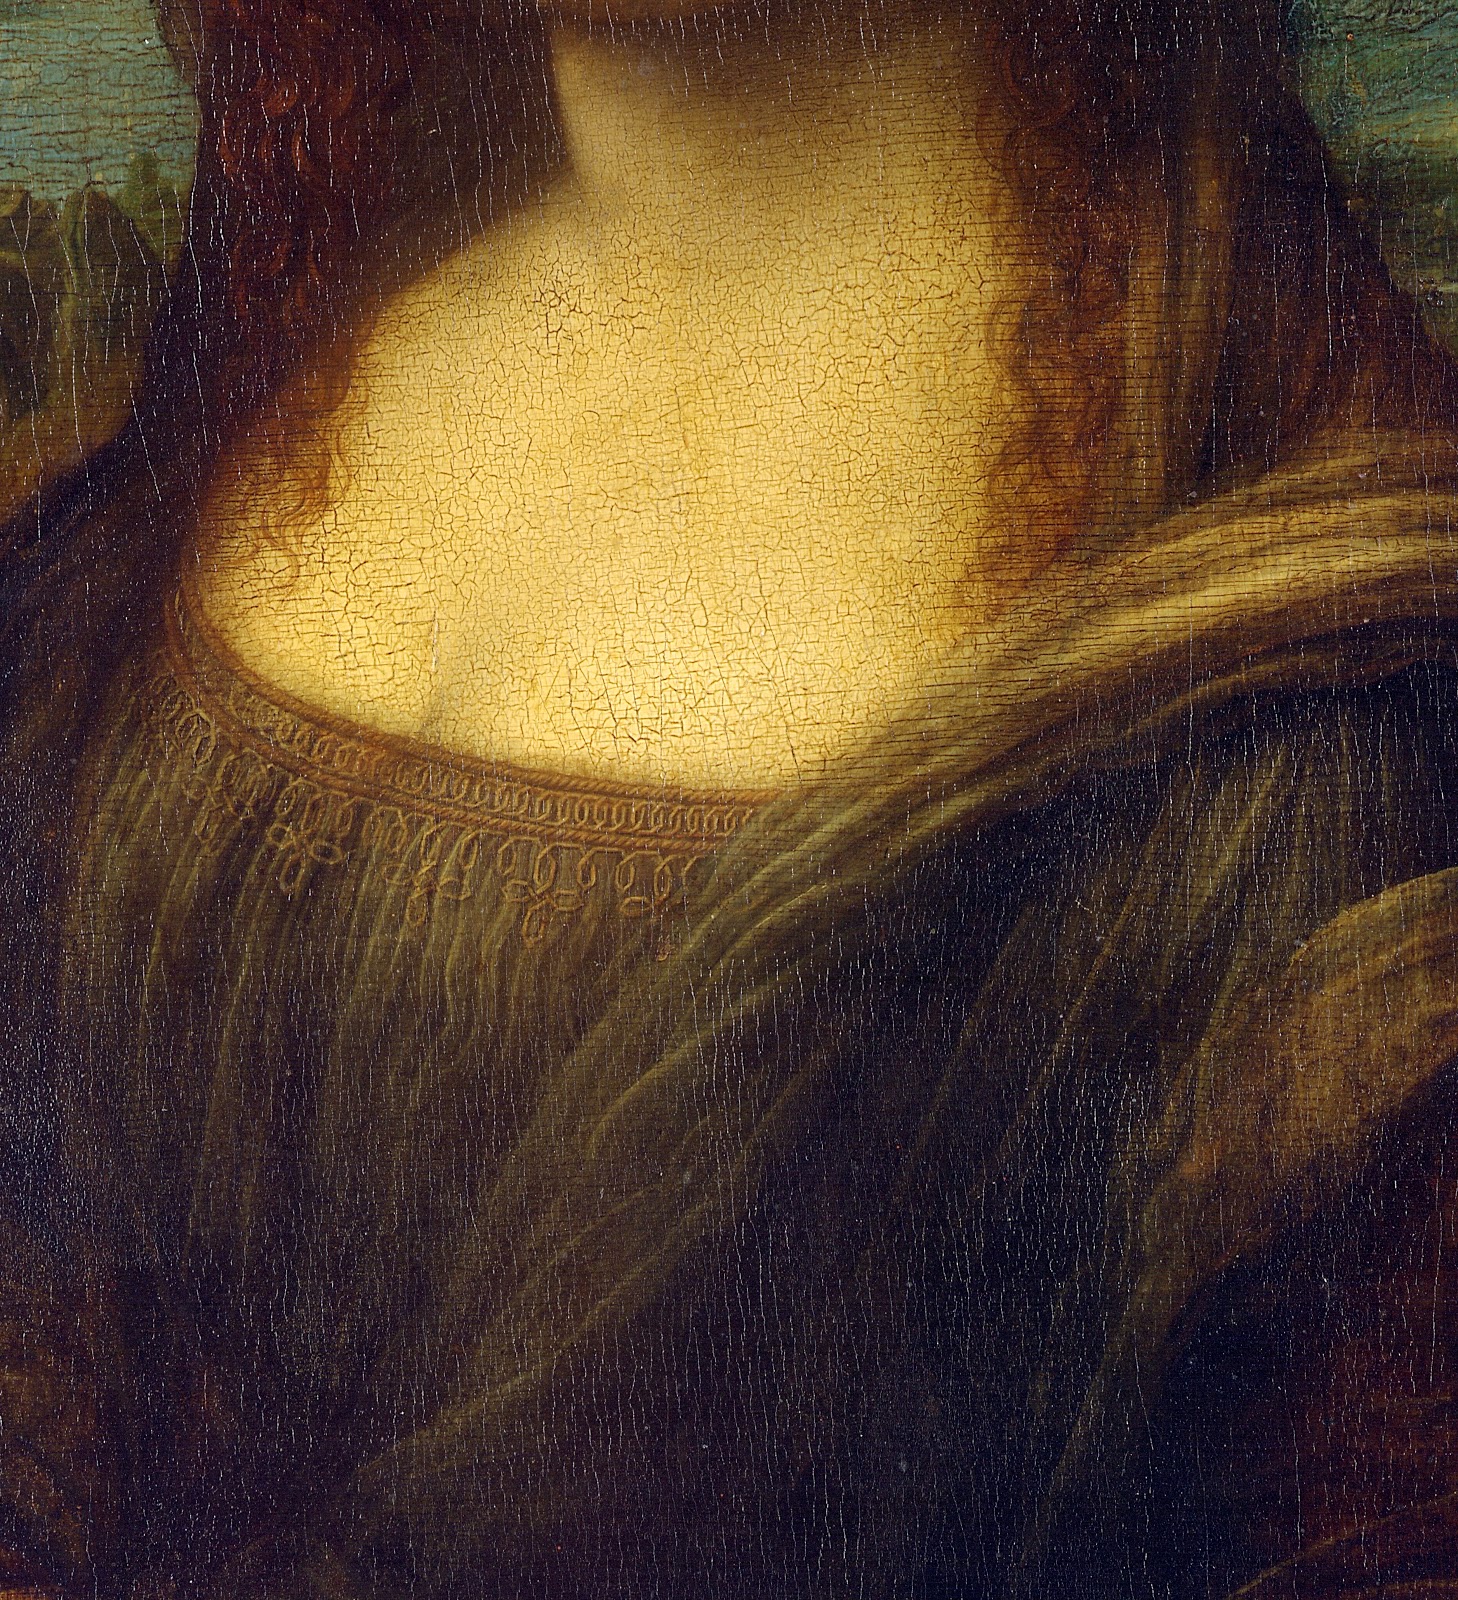 Leonardo+da+Vinci-1452-1519 (981).jpg